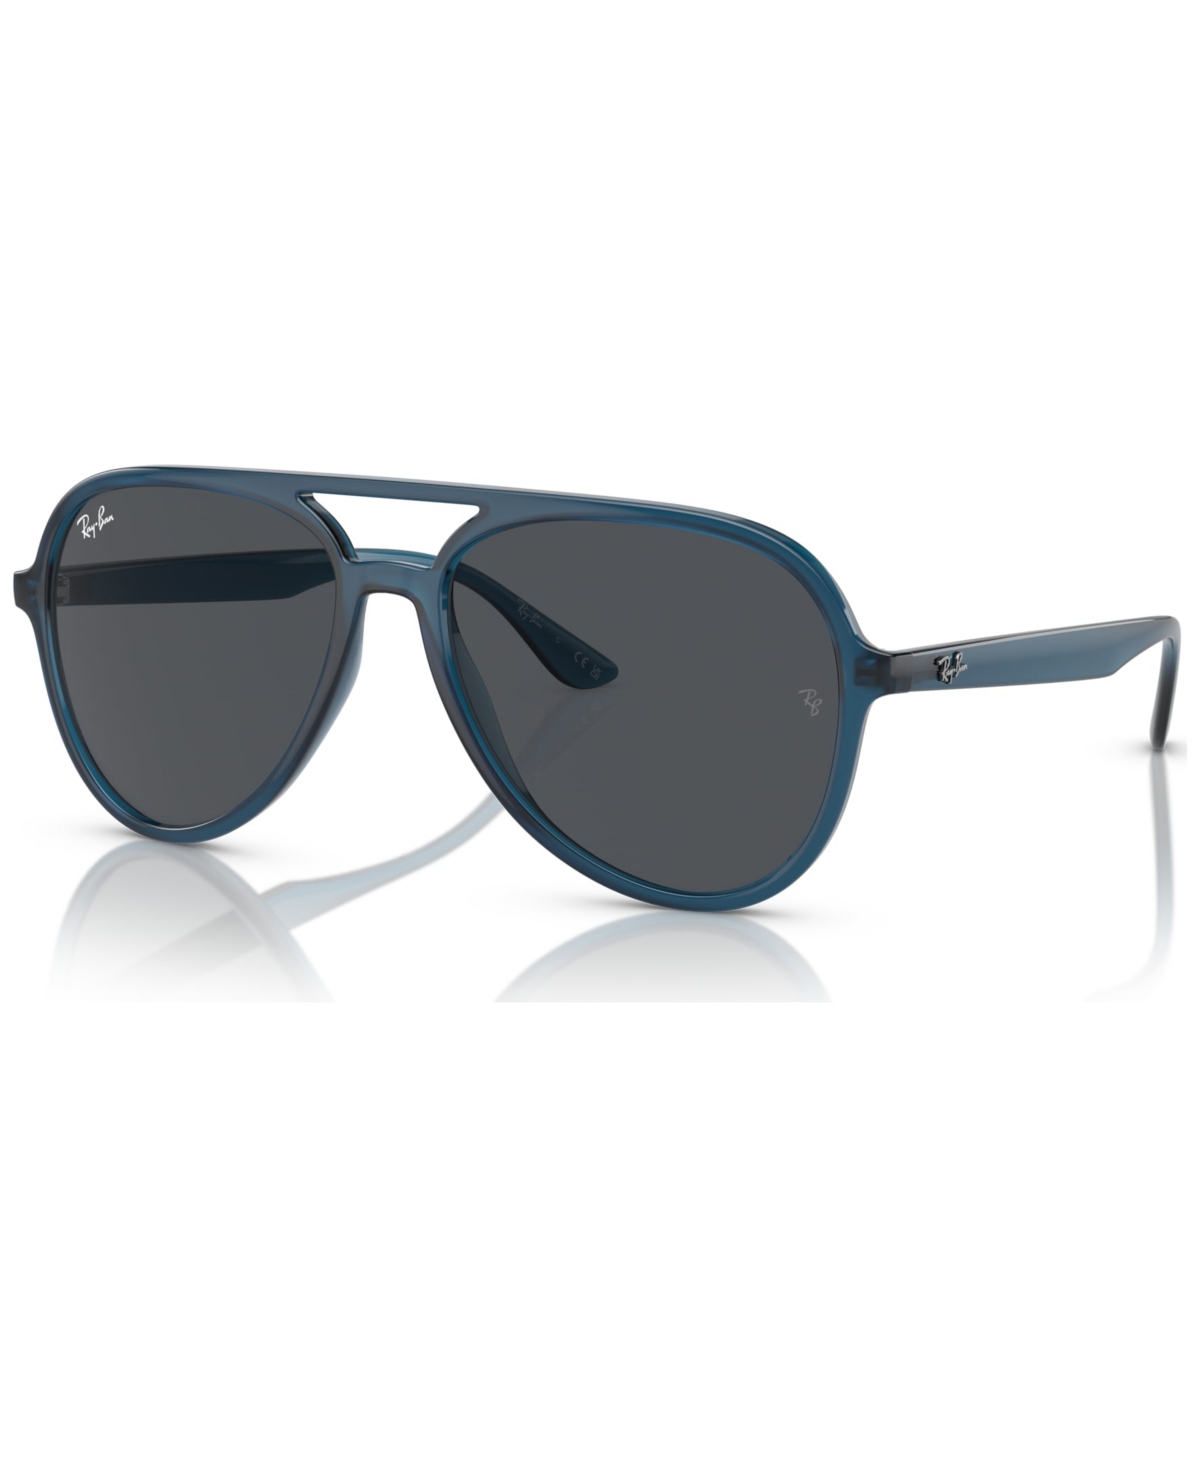 Ray Ban Unisex Sunglasses, Rb4376 In Opal Dark Blue